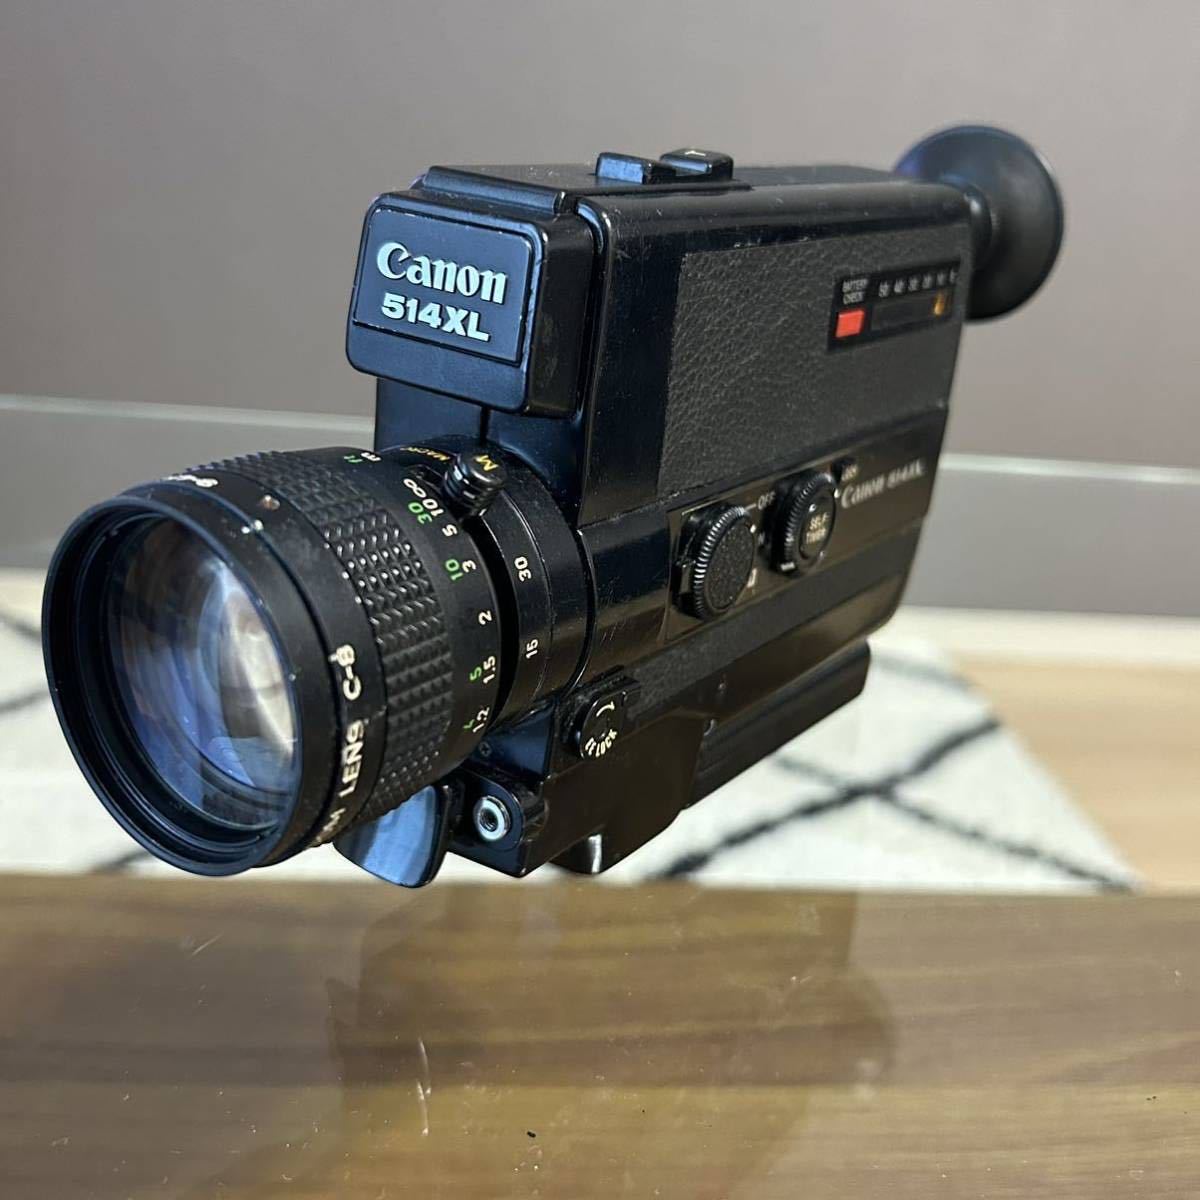 Canon 514XL 8mmカメラ ビデオカメラ - フィルムカメラ